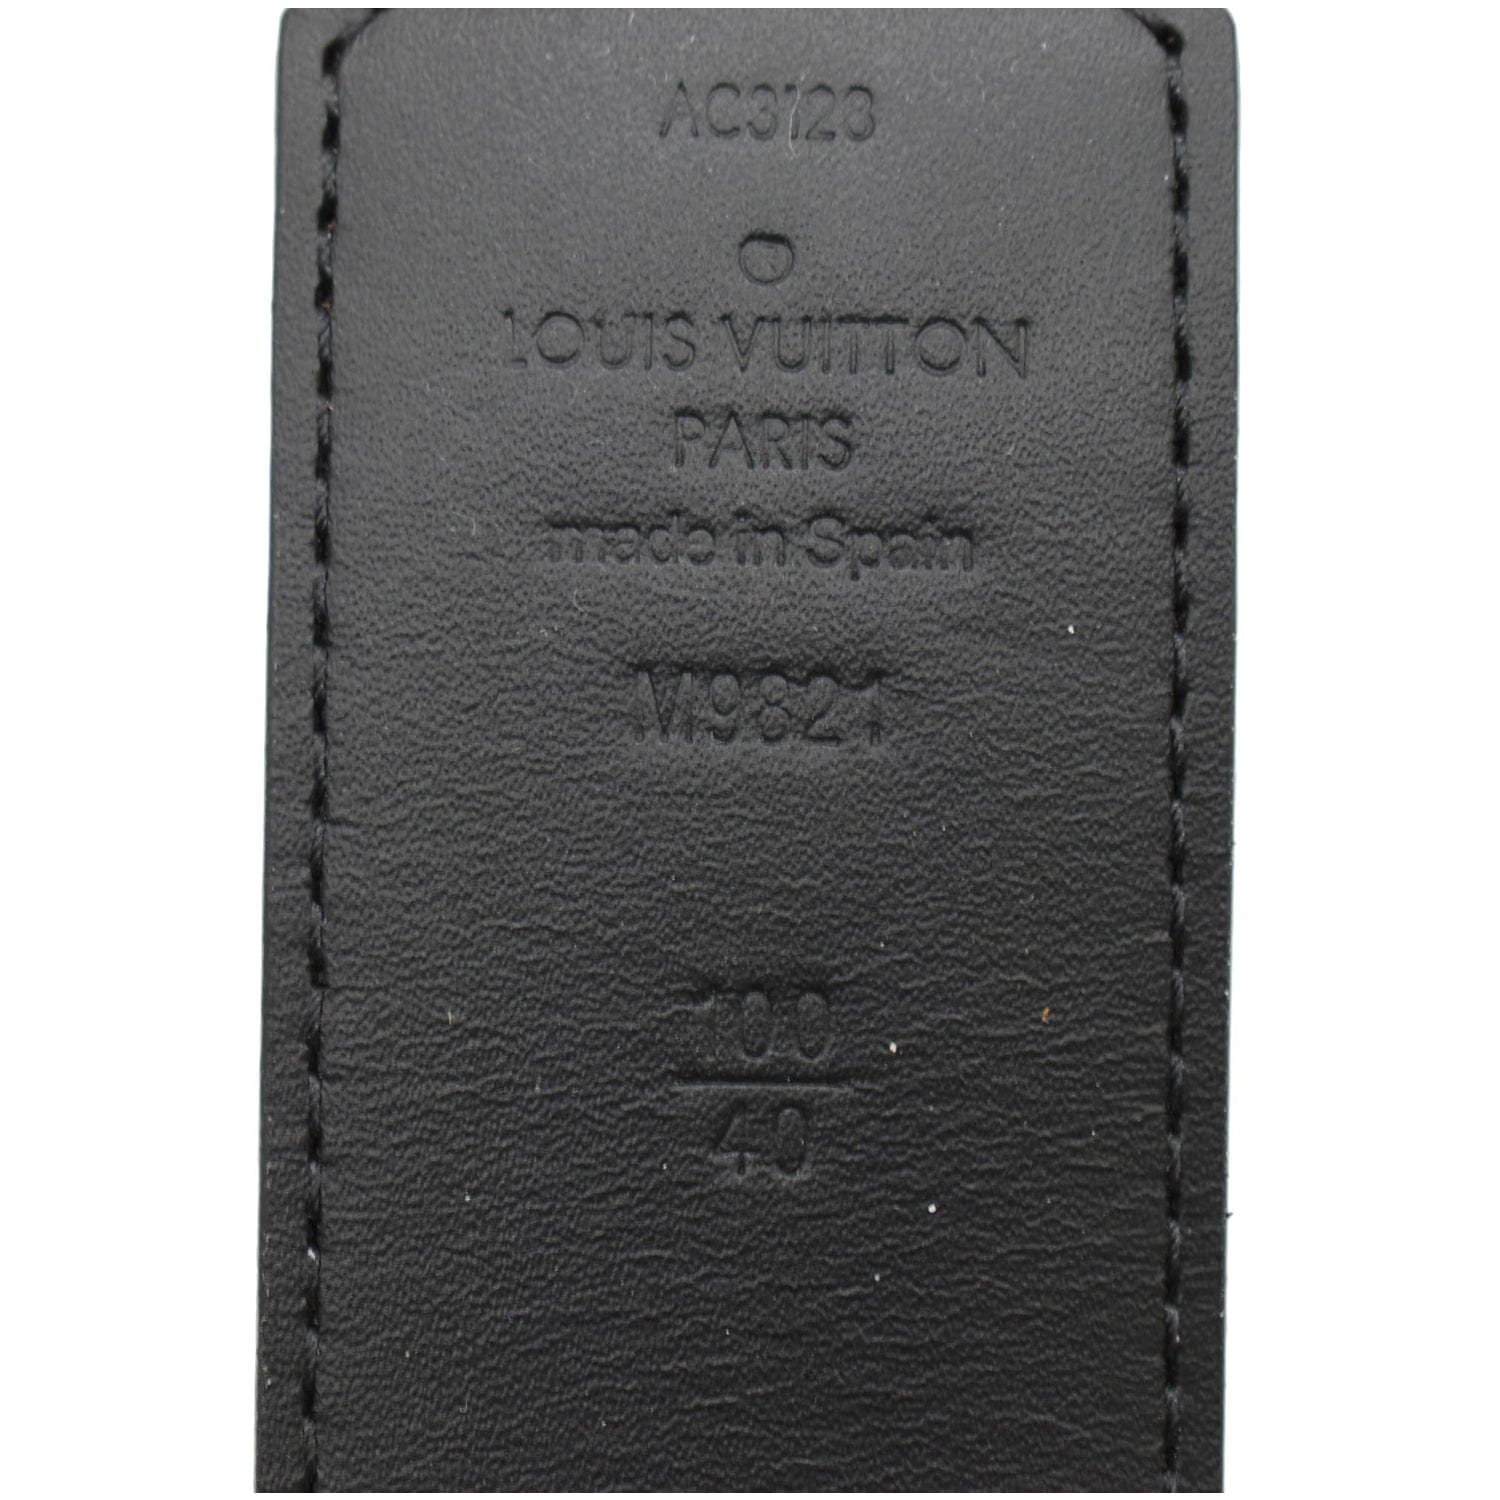 Louis Vuitton Vintage - Leather Belt - Black - Leather Belt - Luxury High  Quality - Avvenice